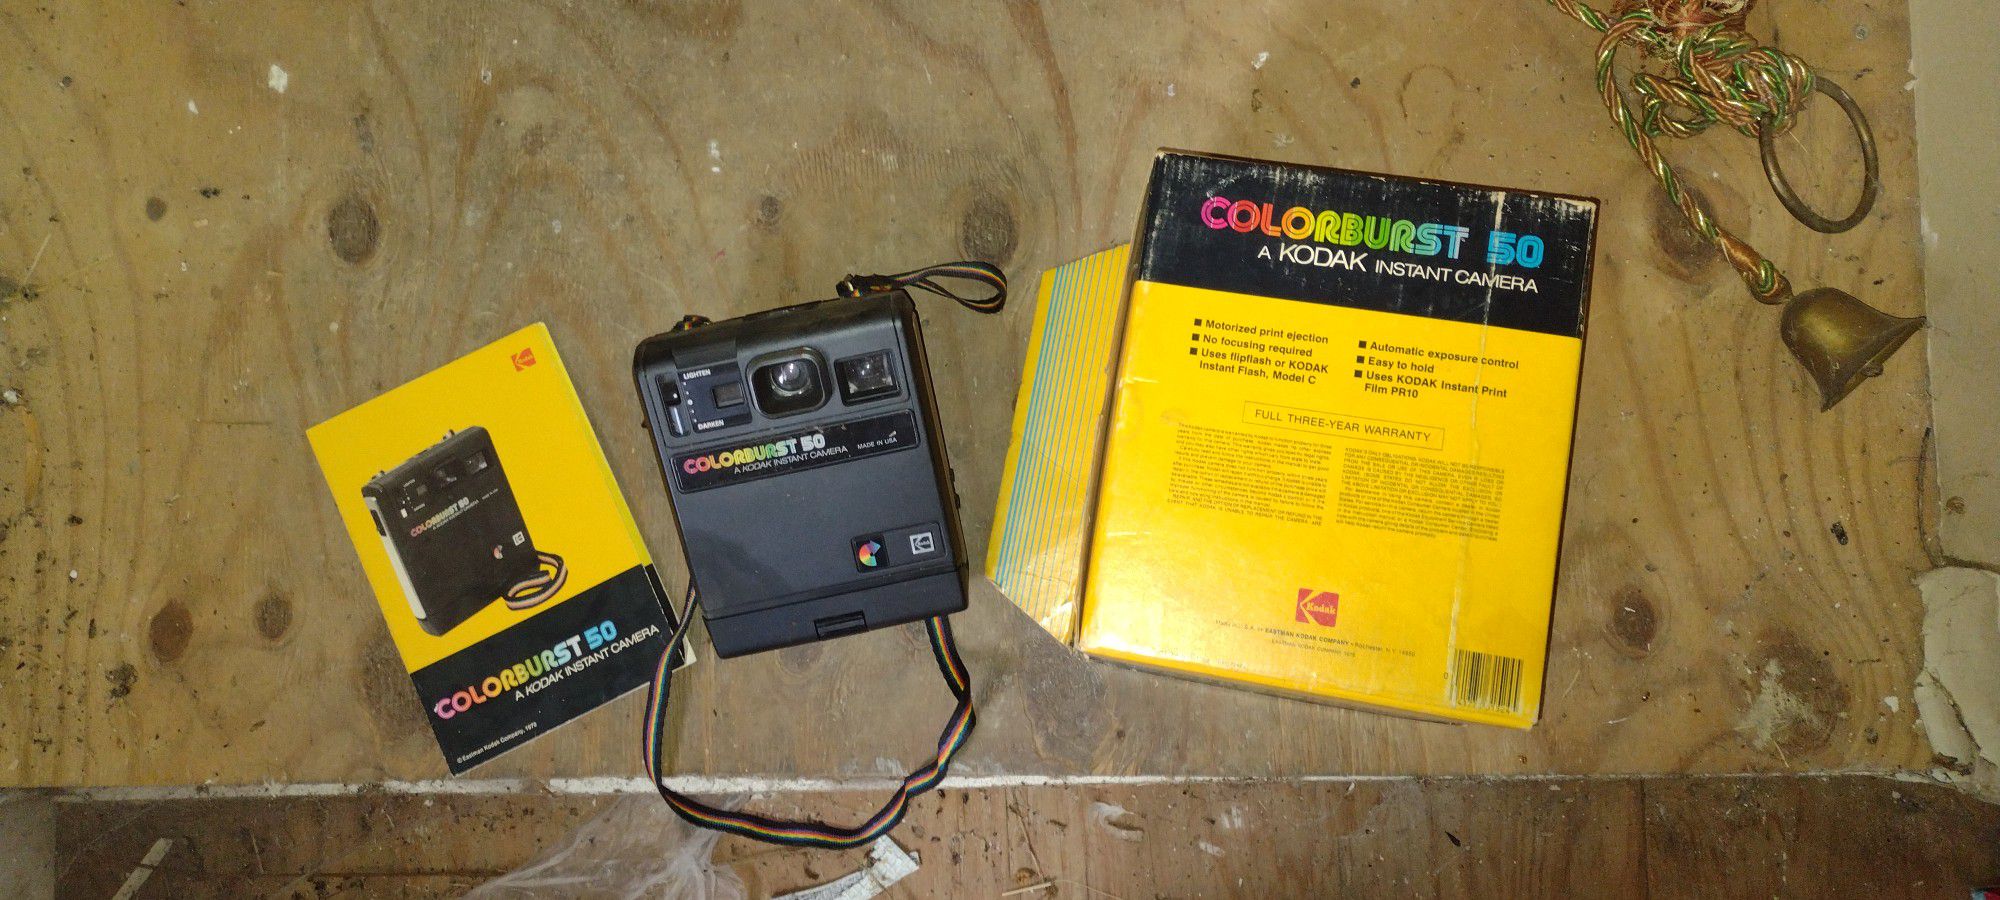  New Kodak Color Burst 50